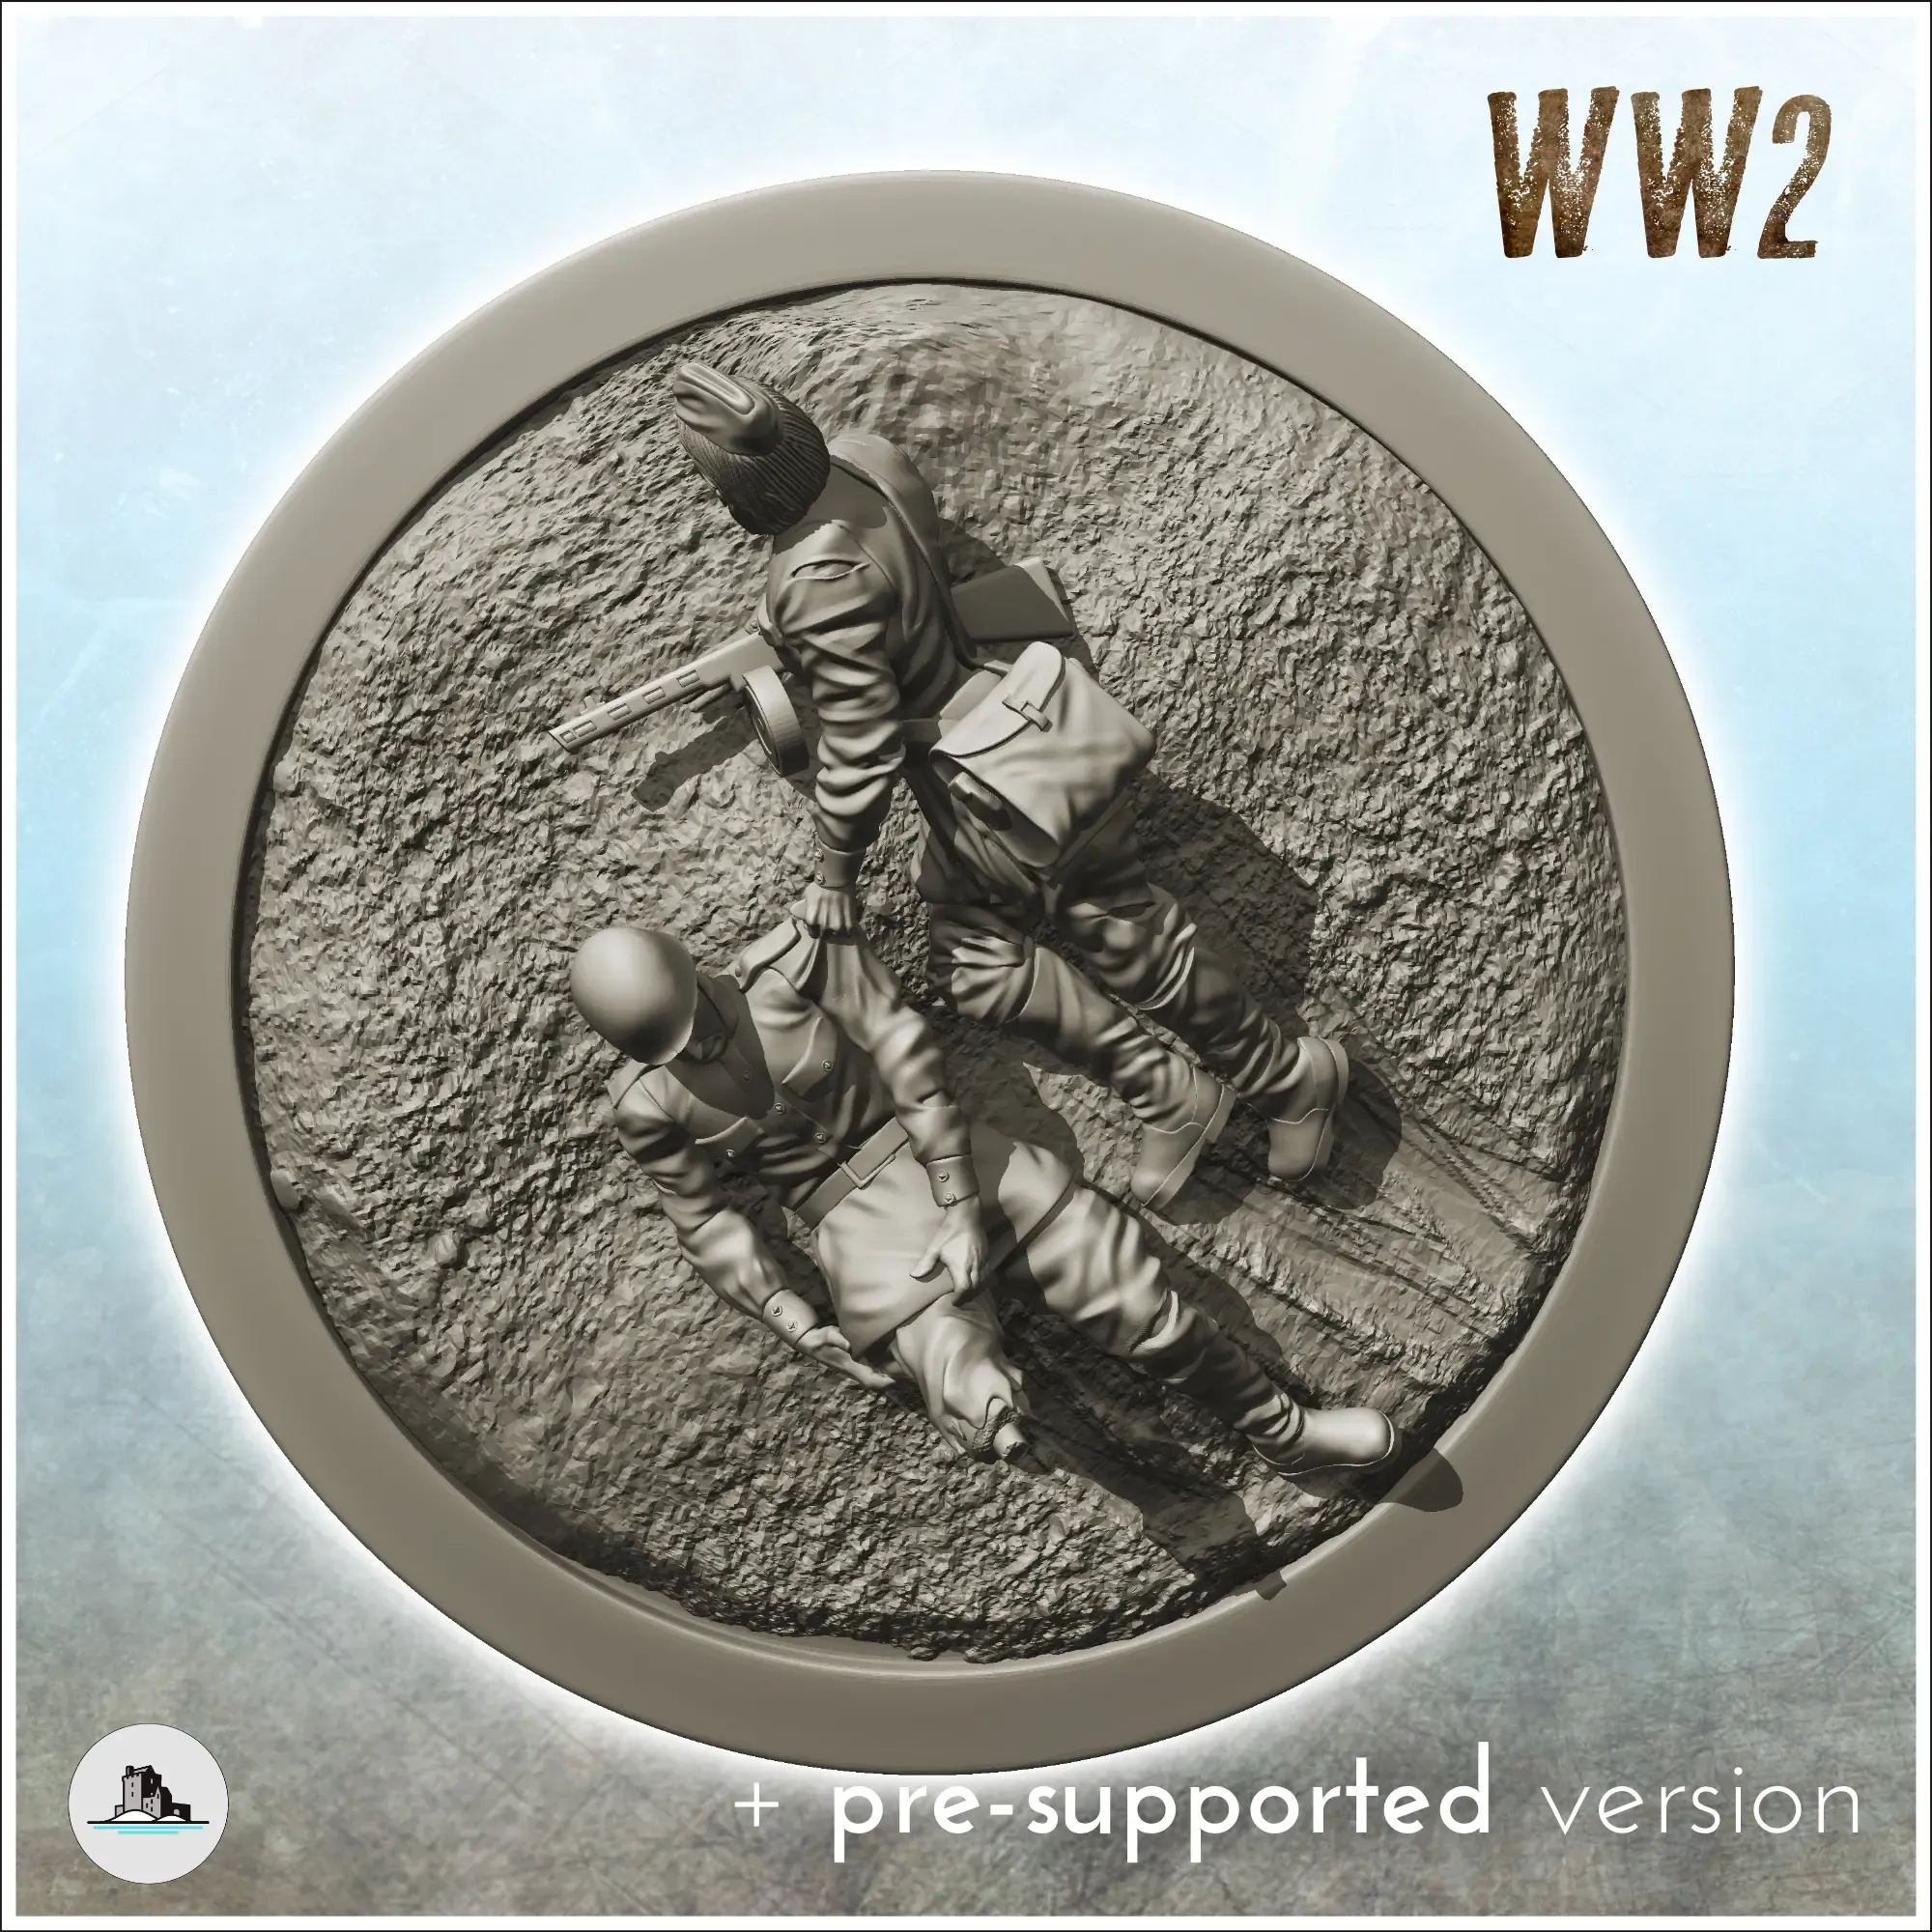 USSR medic - WW2 terrain diaroma